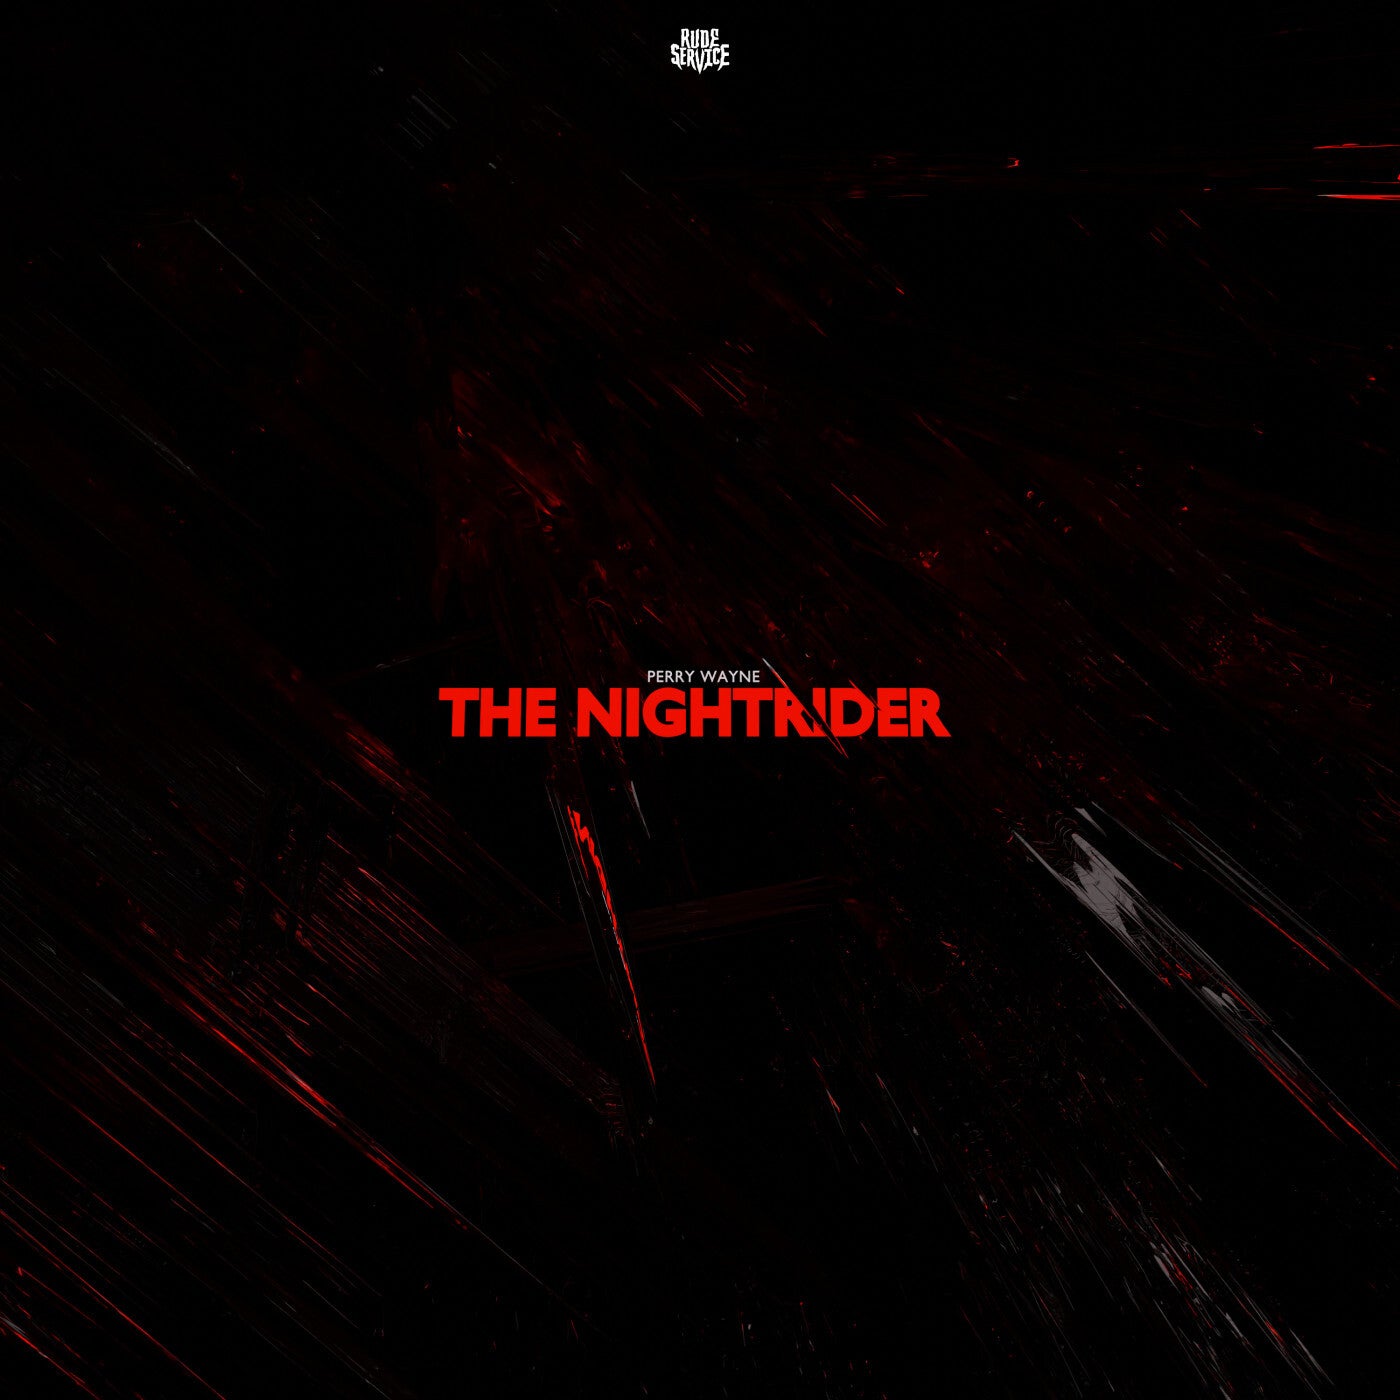 The Nightrider